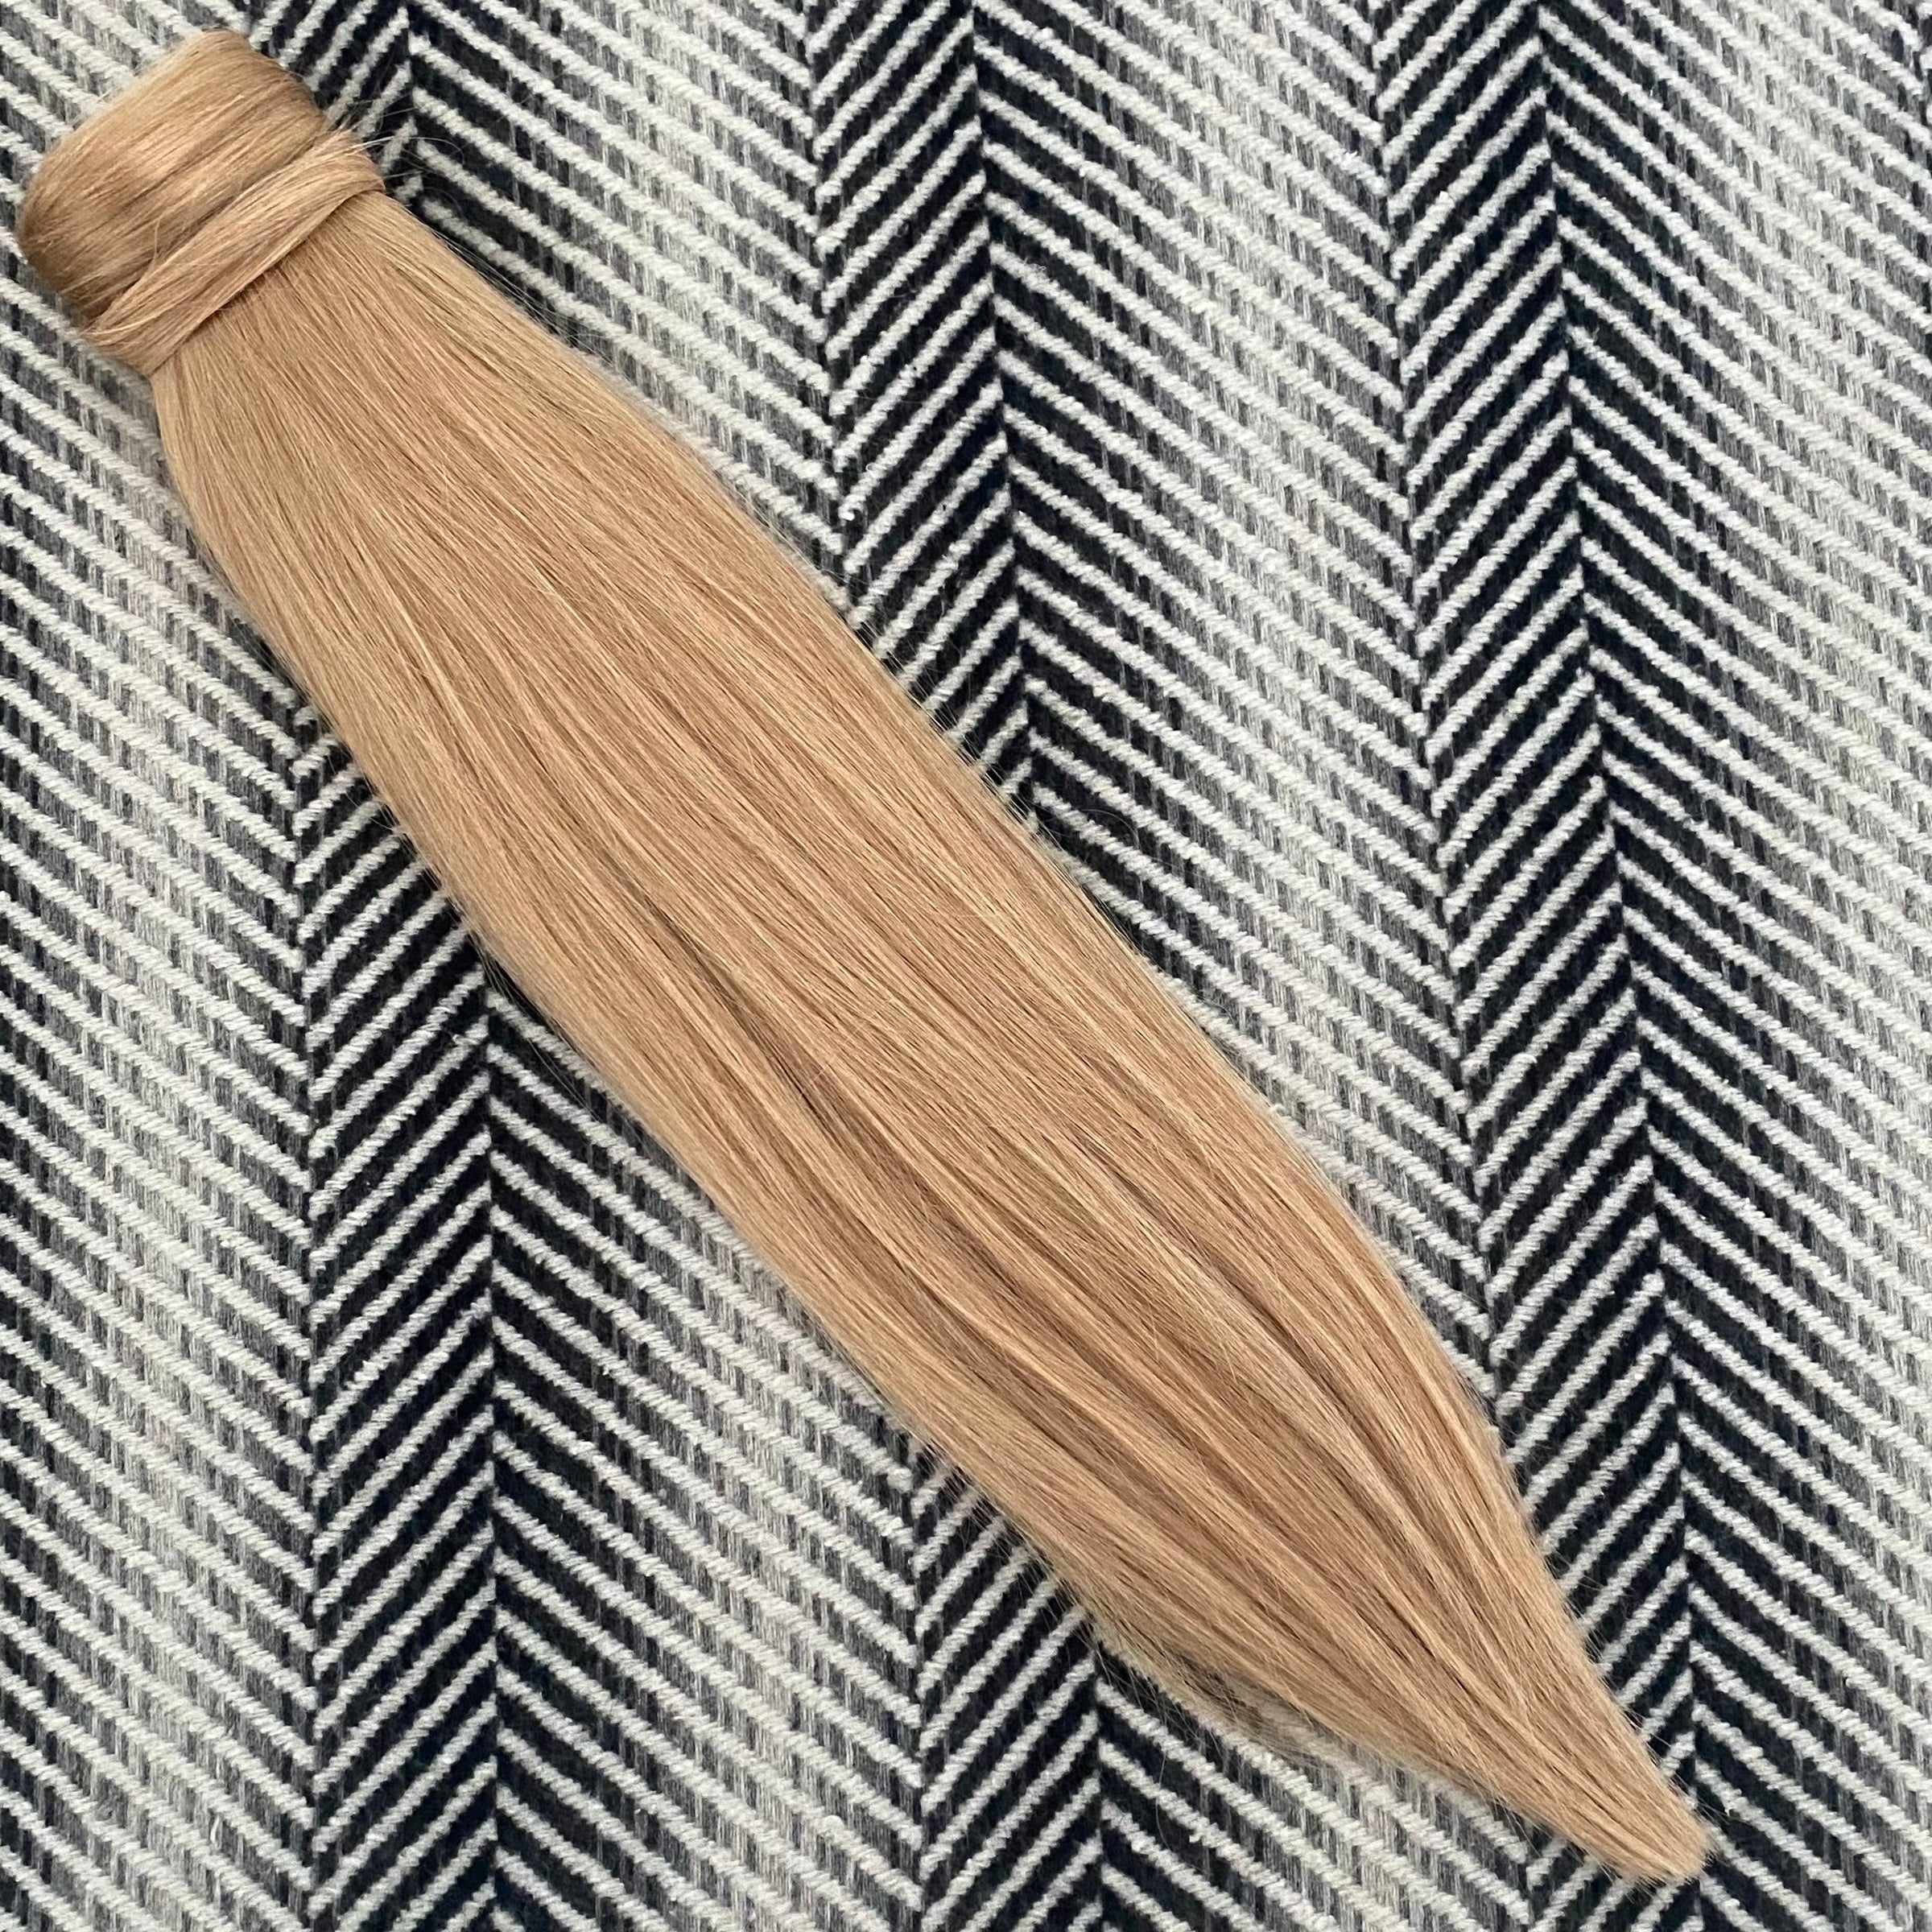 Ponytail Hair Extensions #18 Honey Blonde